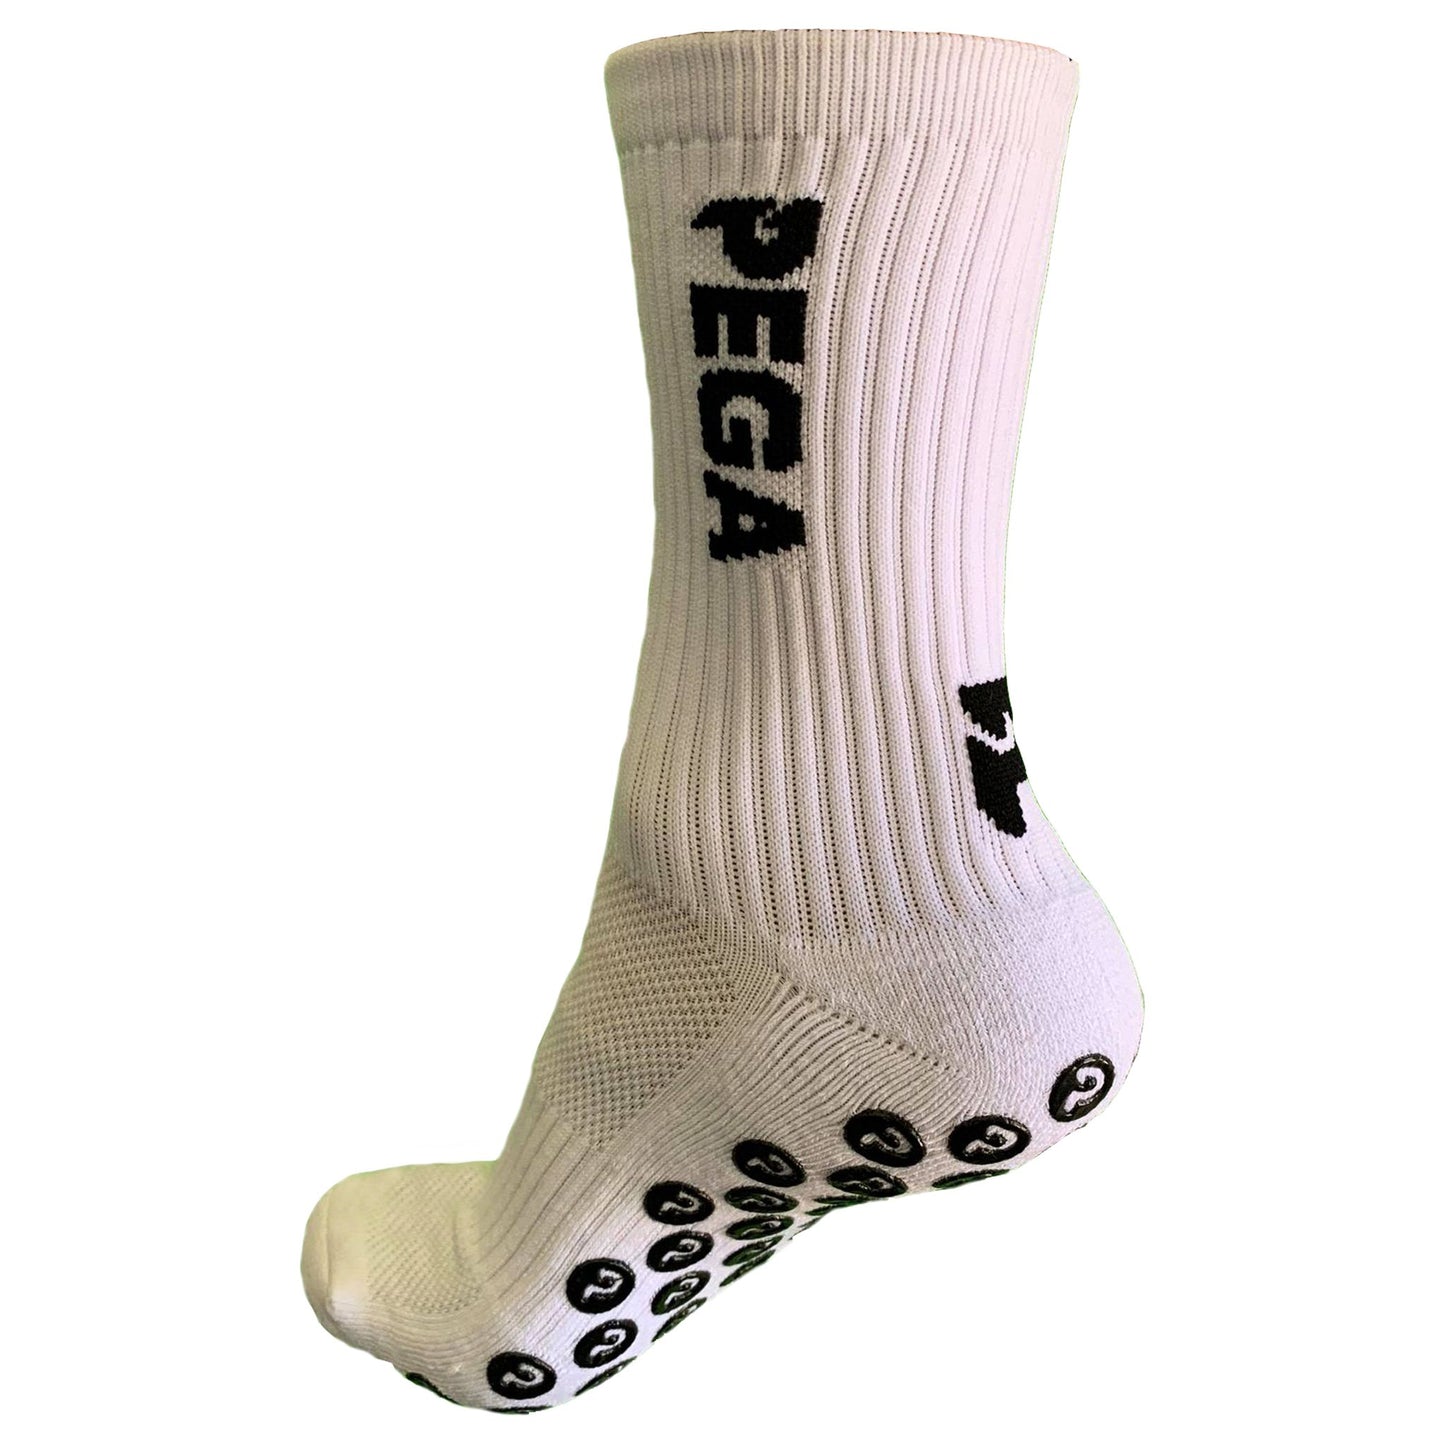 Grips Socks - Pega